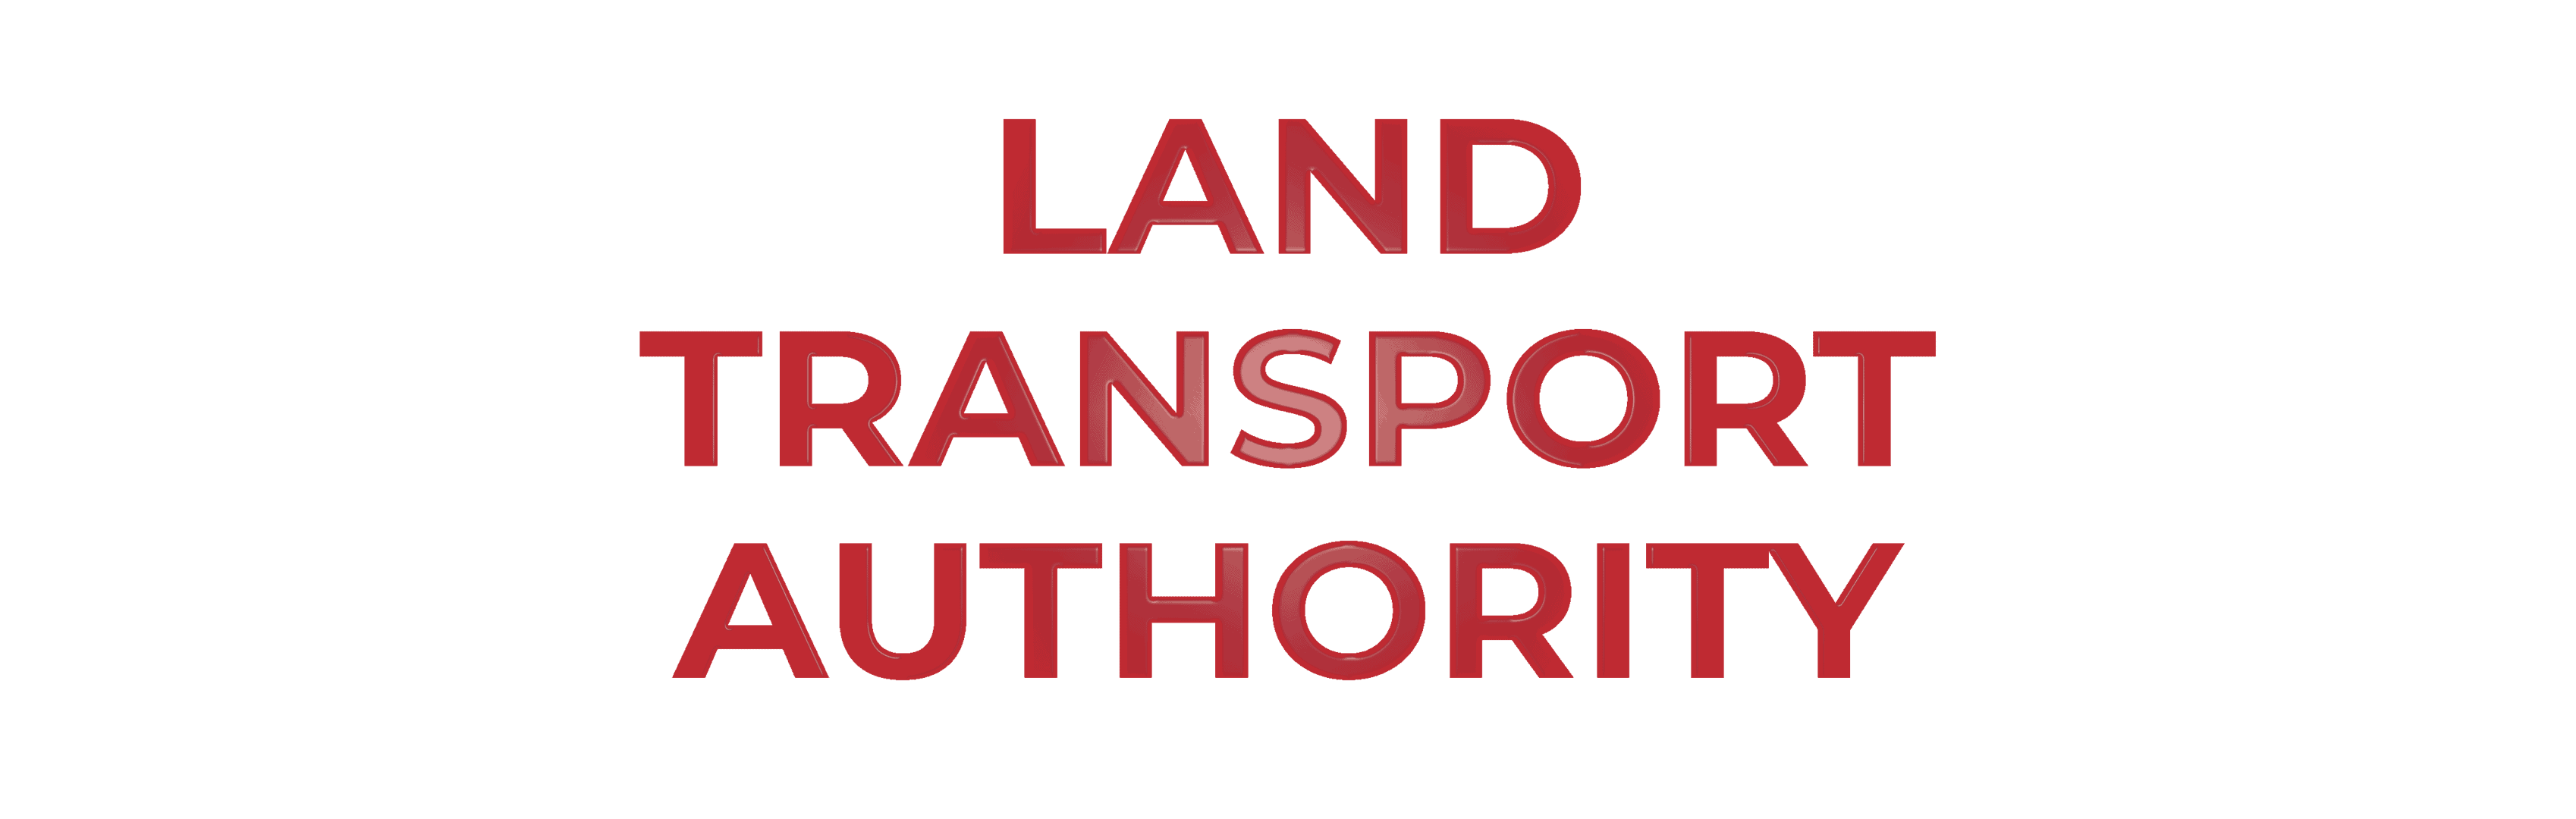 Land Transport Authority Client